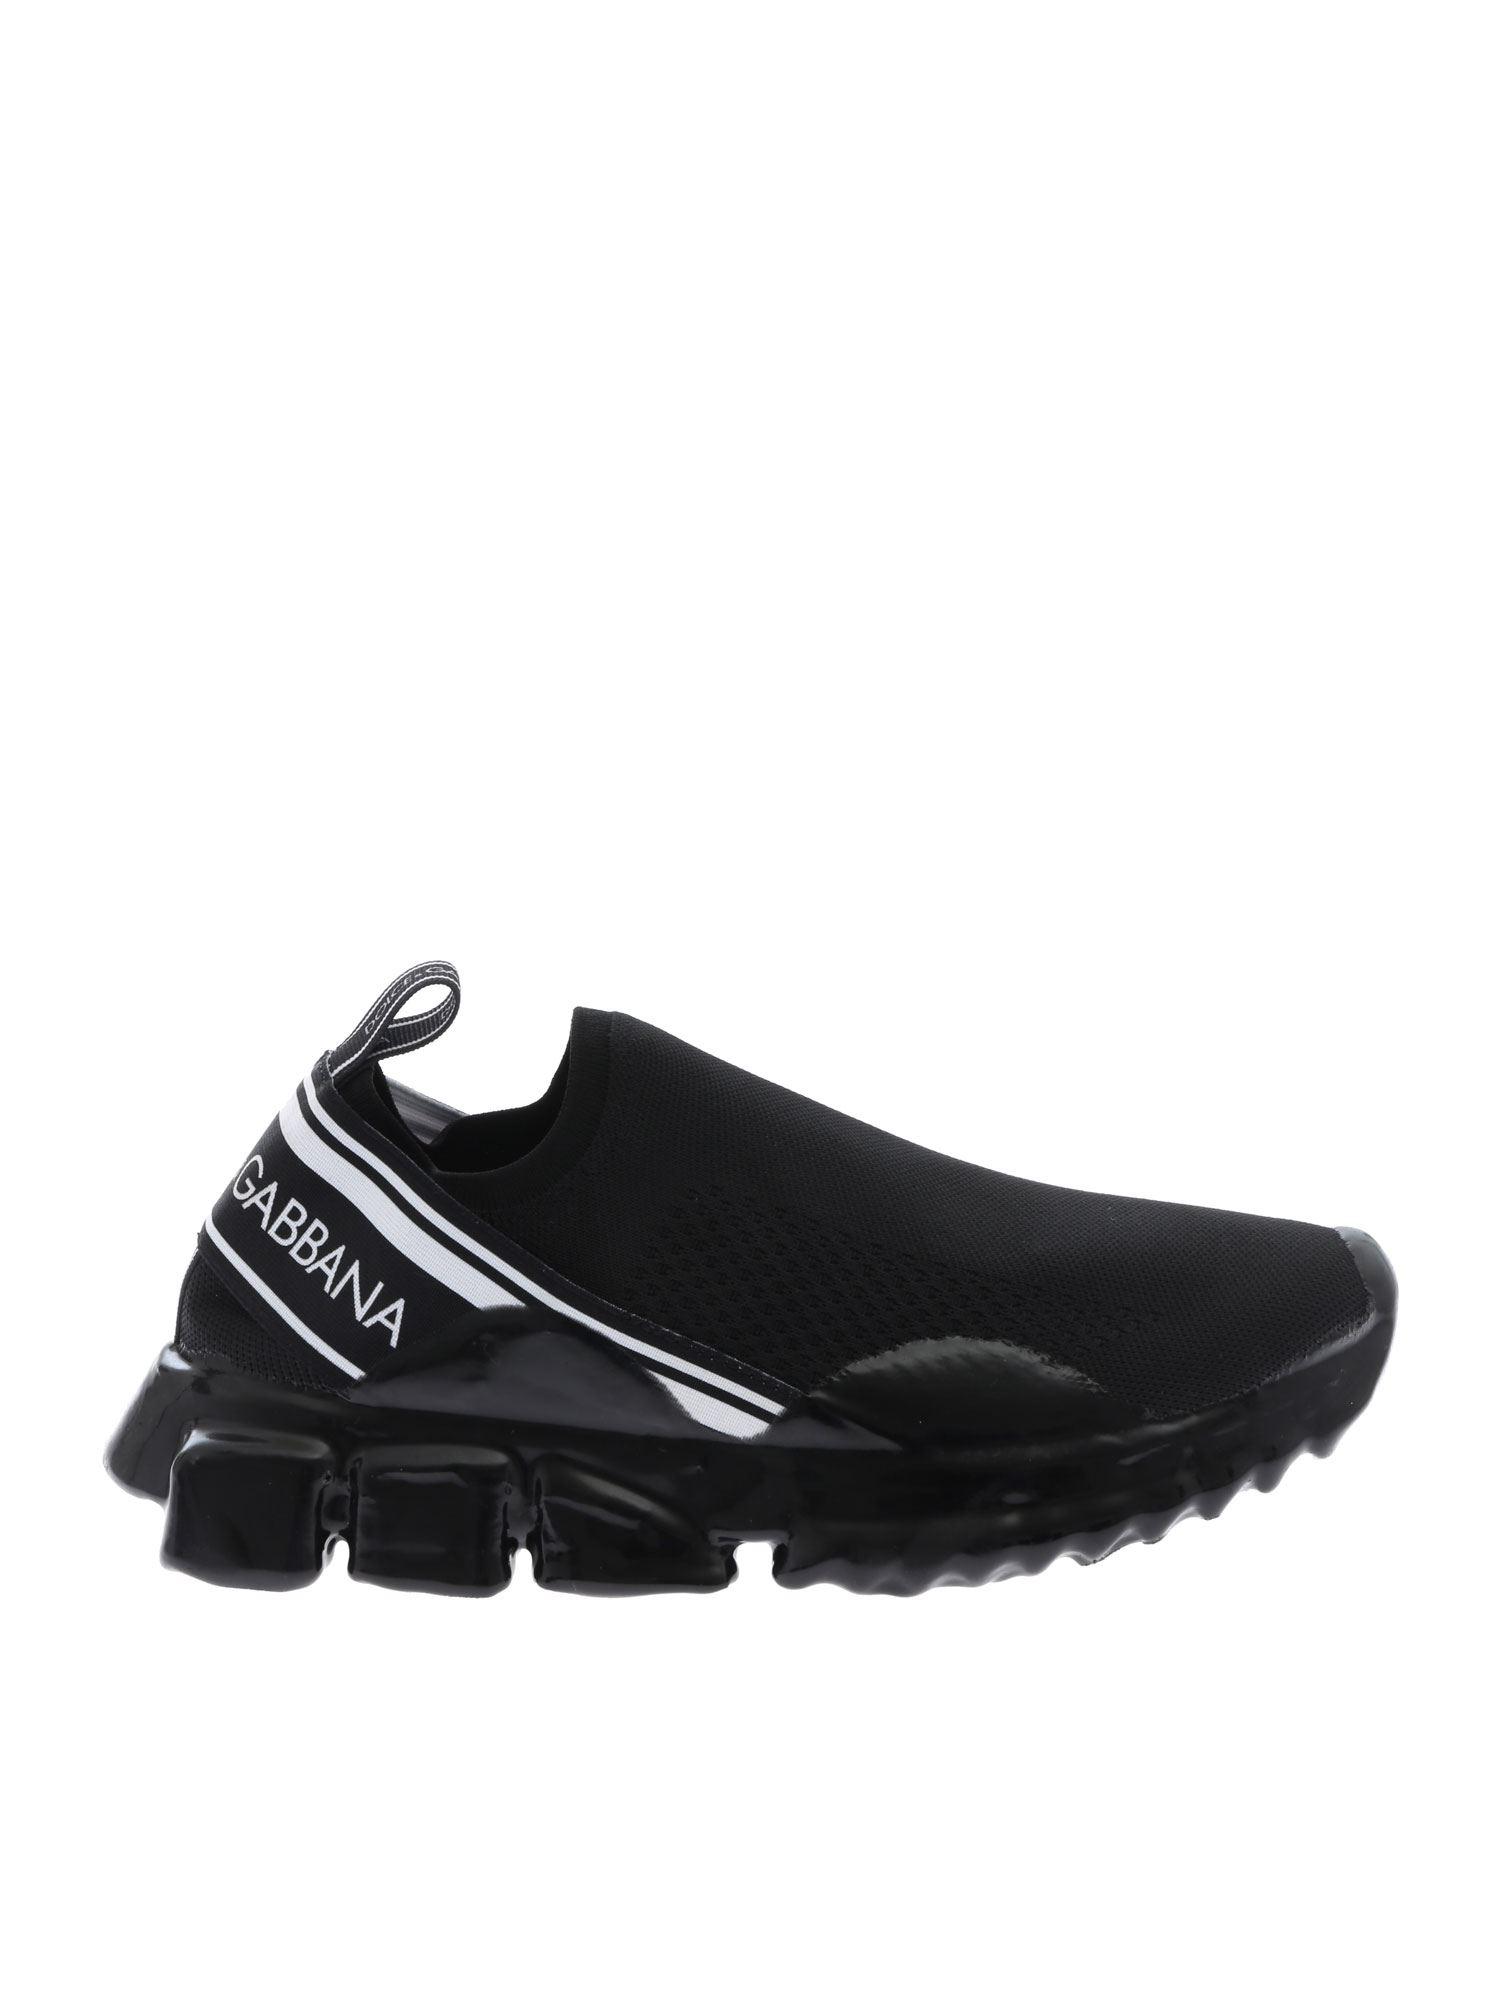 Dolce & Gabbana Rubber Sorrento Melt Sneakers In Black for Men - Lyst